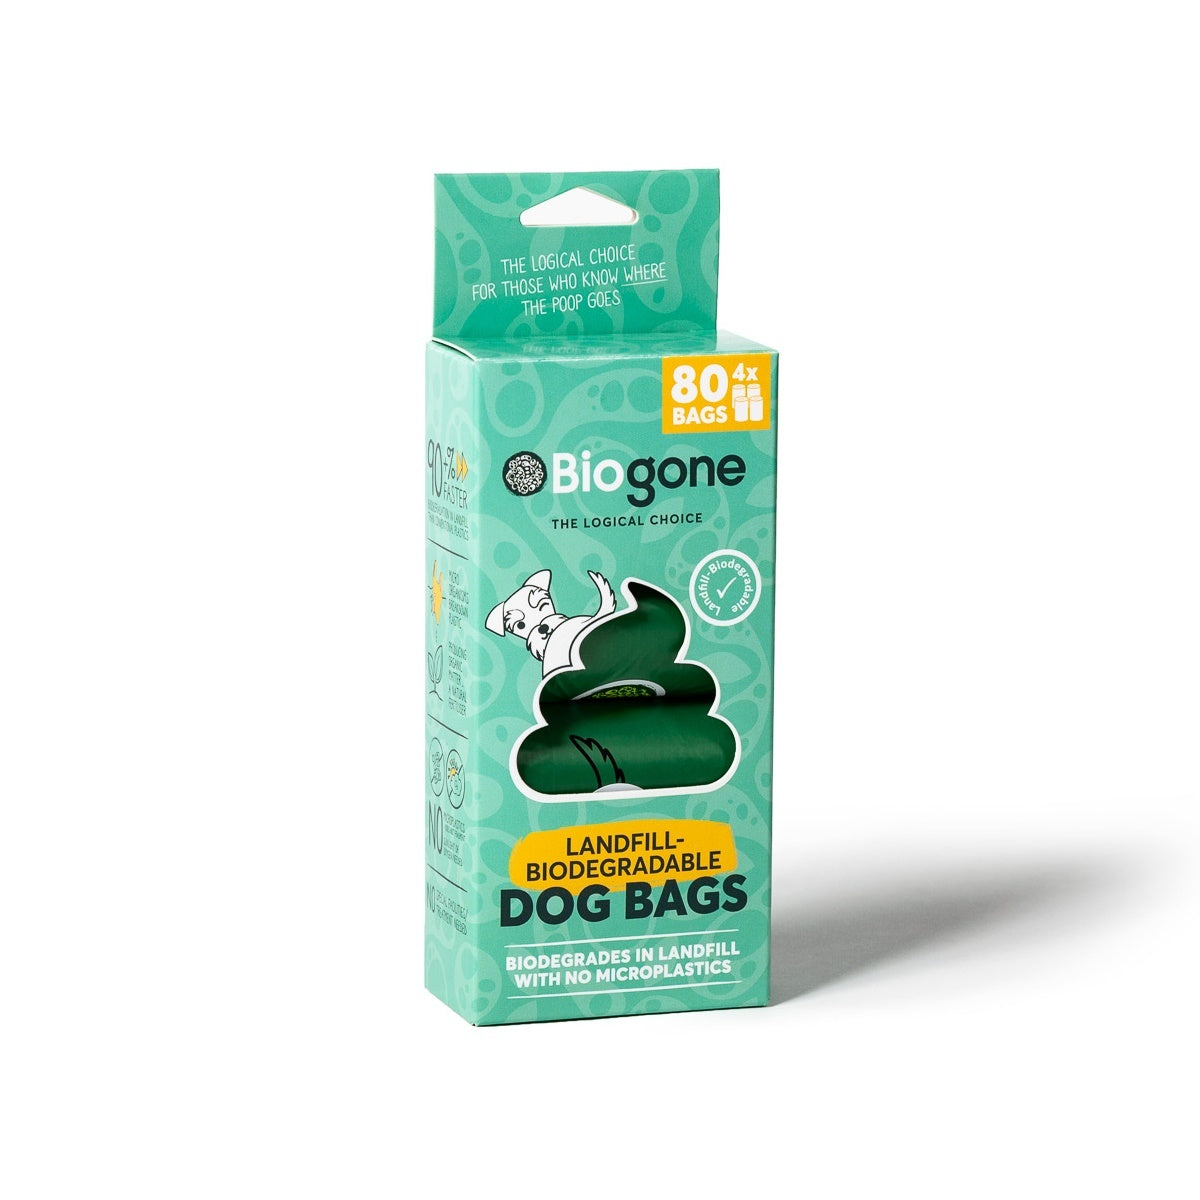 Bio-Gone biodegradable dog poo waste bags